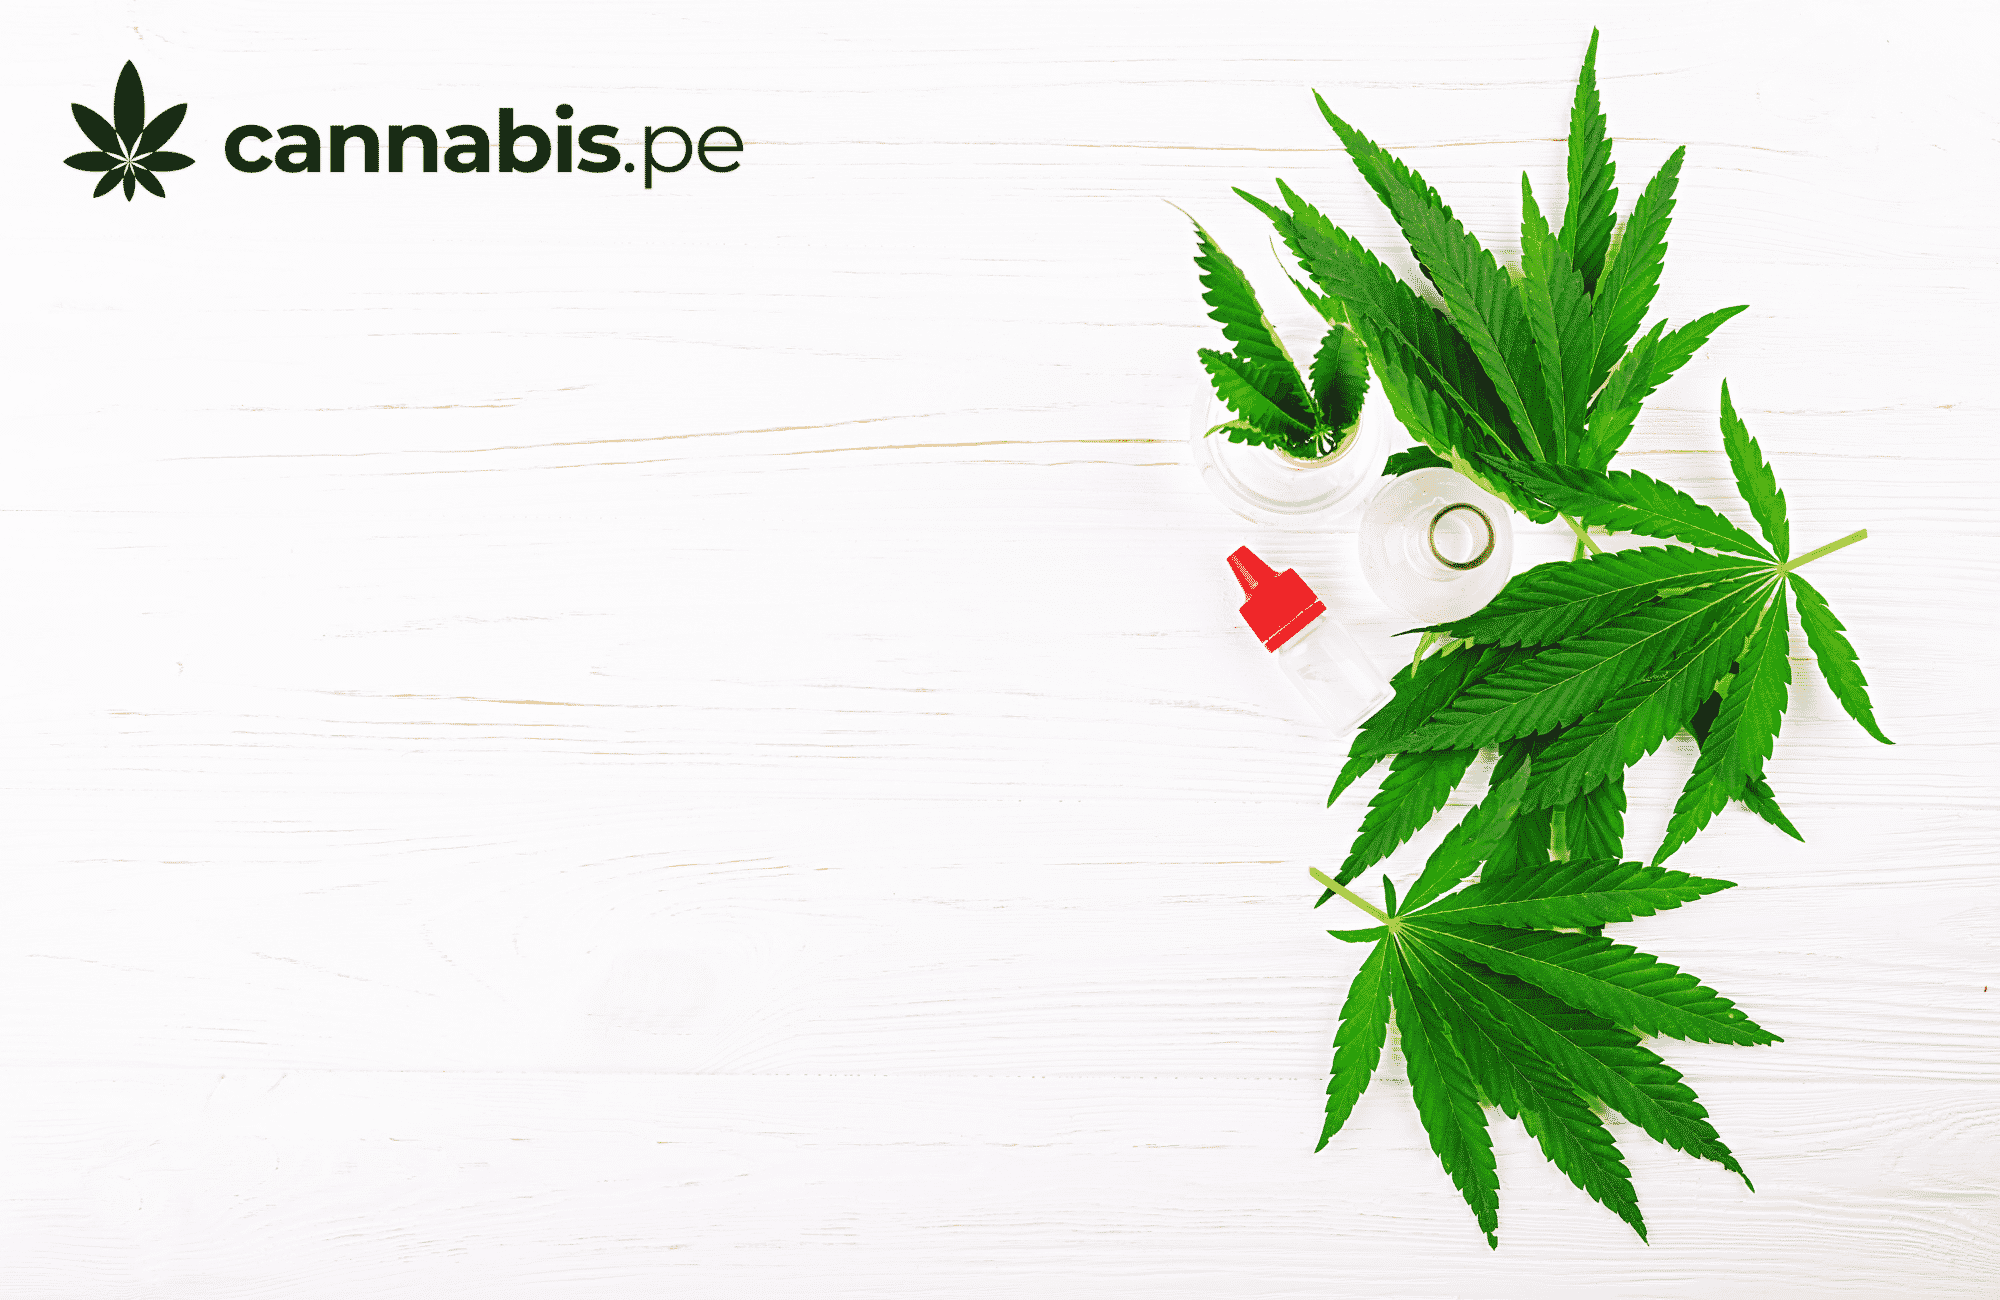 cannabis medicinal y fibromialgia cannabis.pe cannabis medicinal en peru